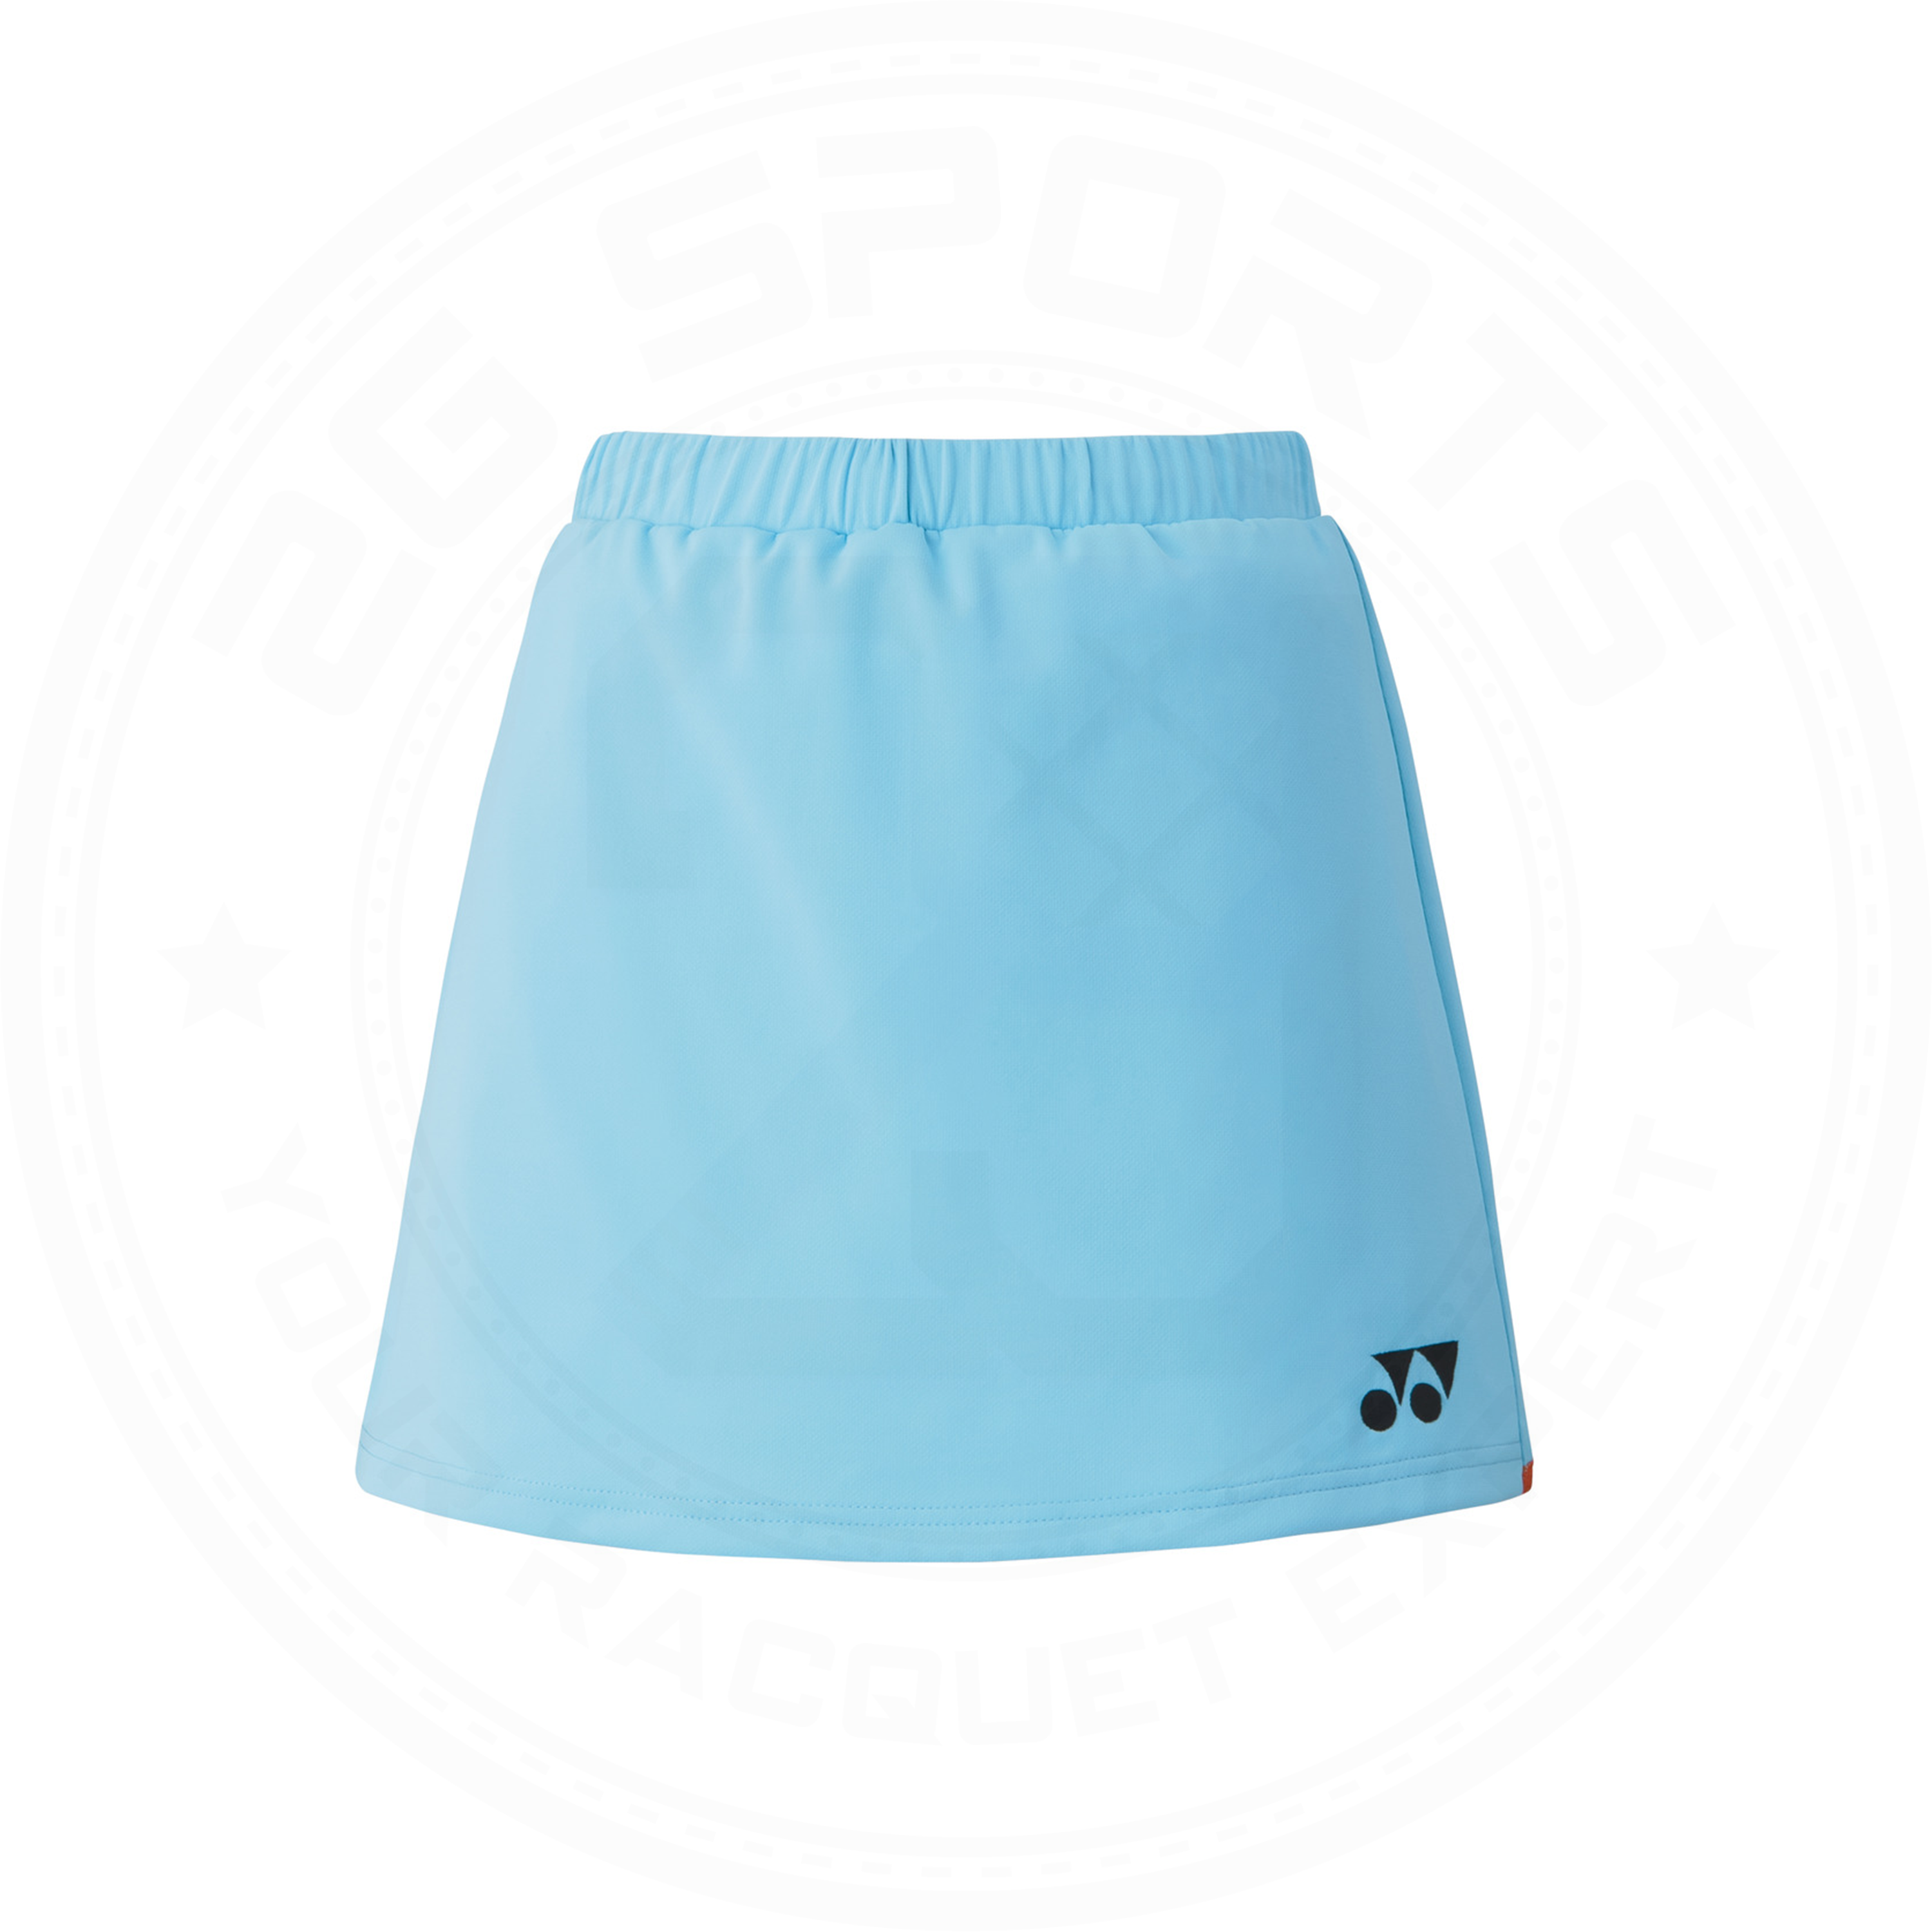 Yonex Premium Badminton/ Tennis Sports Skort 26095 Water Blue (Clearance)